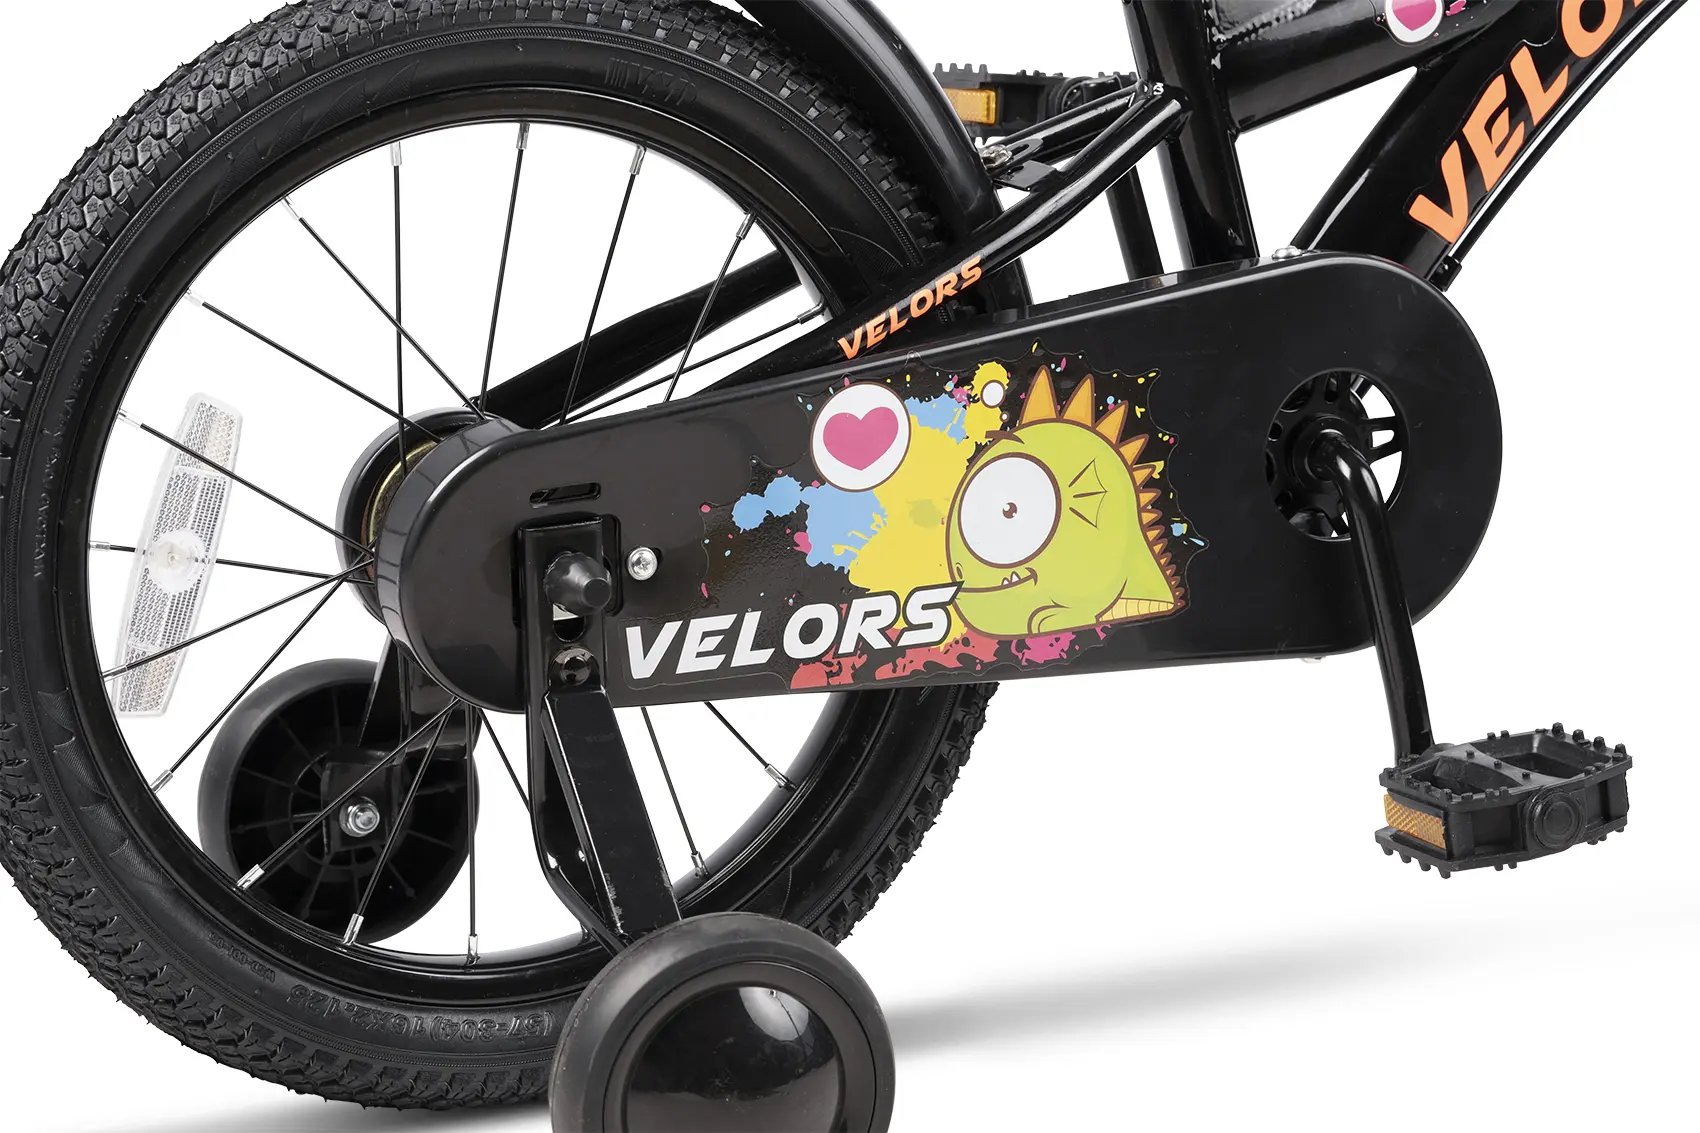 Bicicleta pentru copii Velors V1601B, cadru otel, 16